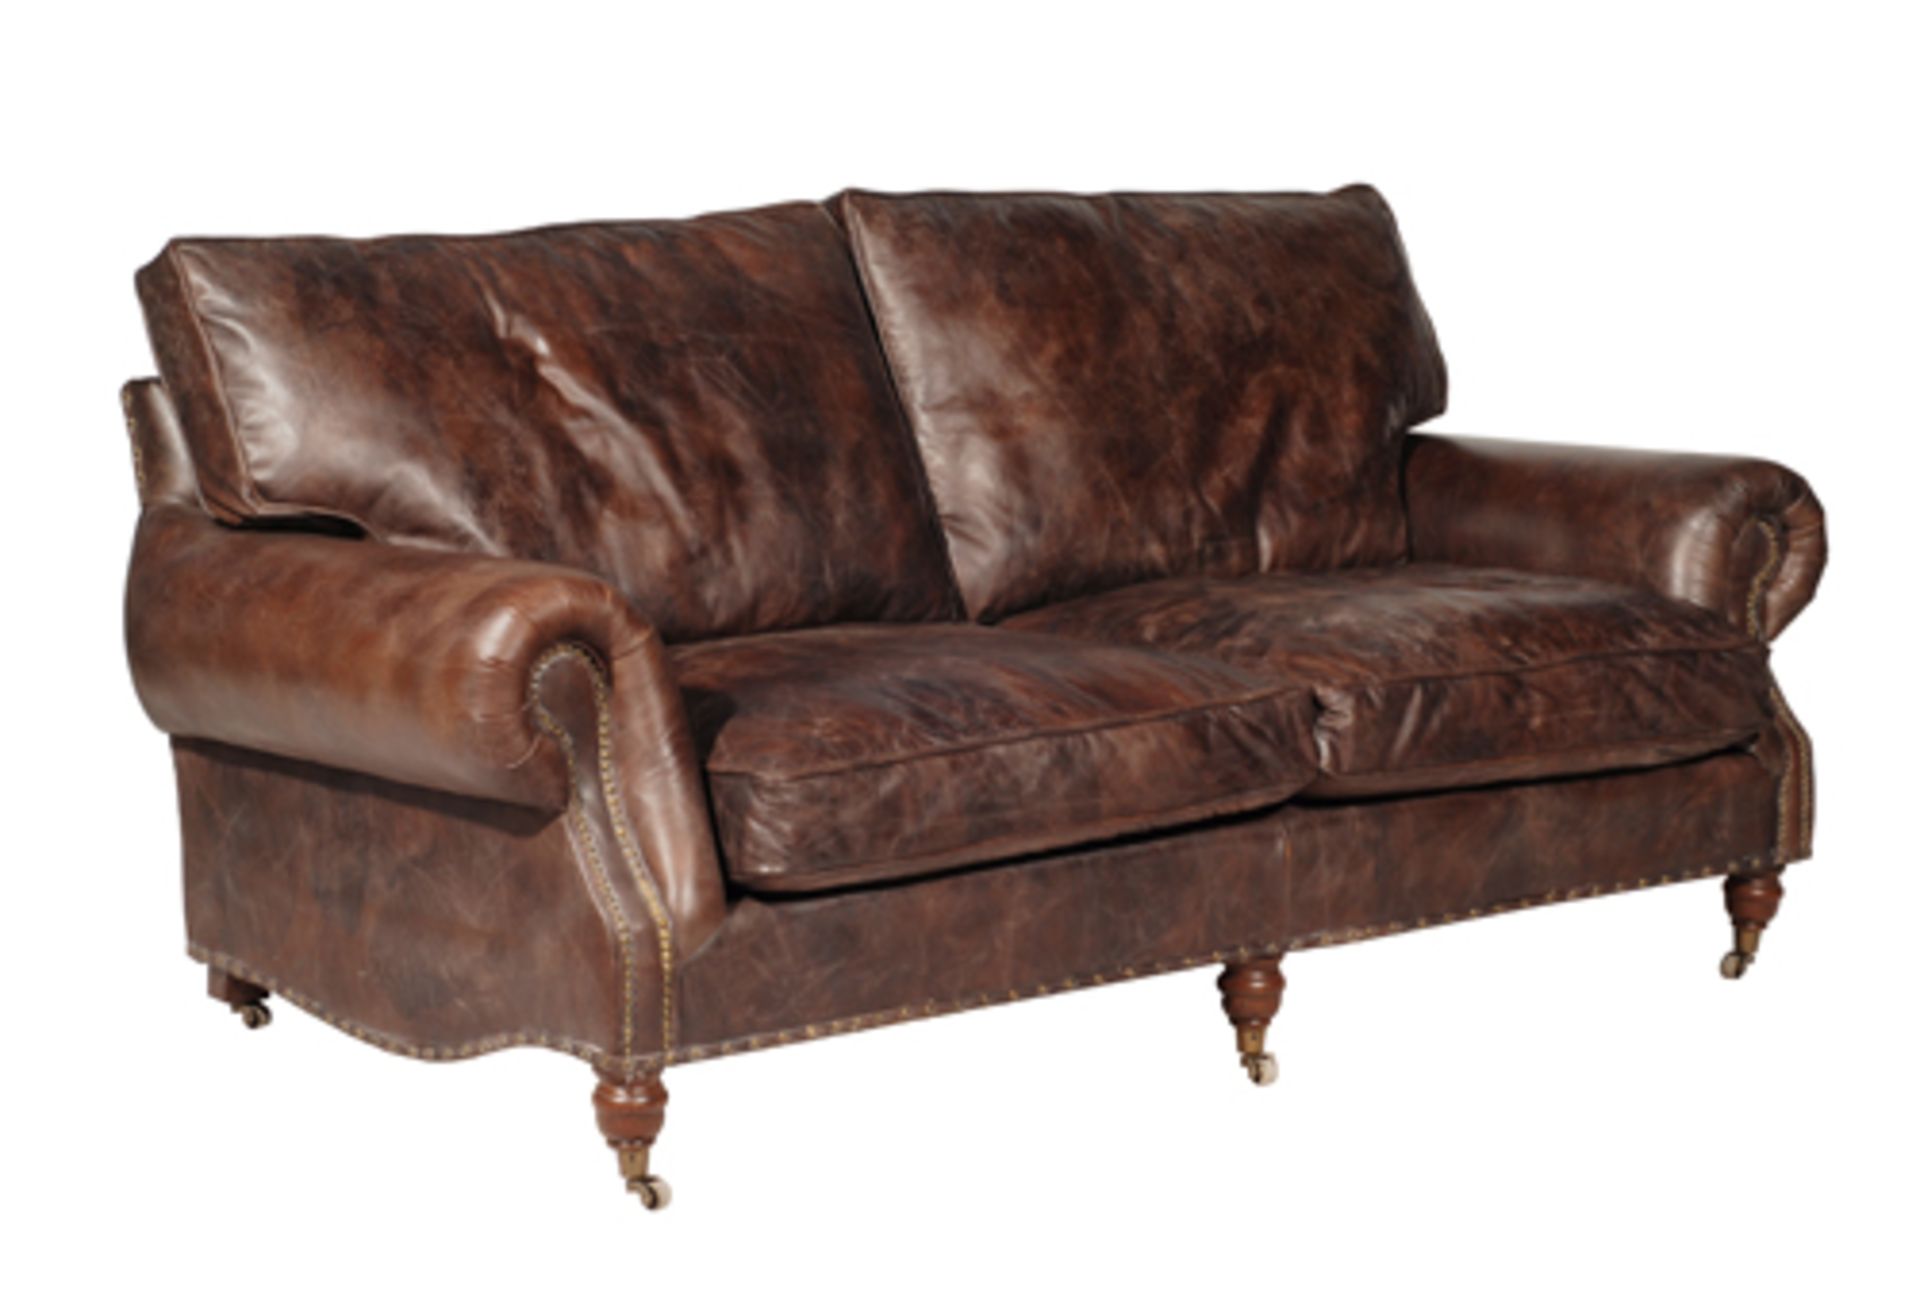 Balmoral Sofa 3 Seater A Contemporary Take On Traditional Chesterfield Design The Balmoral Sofa